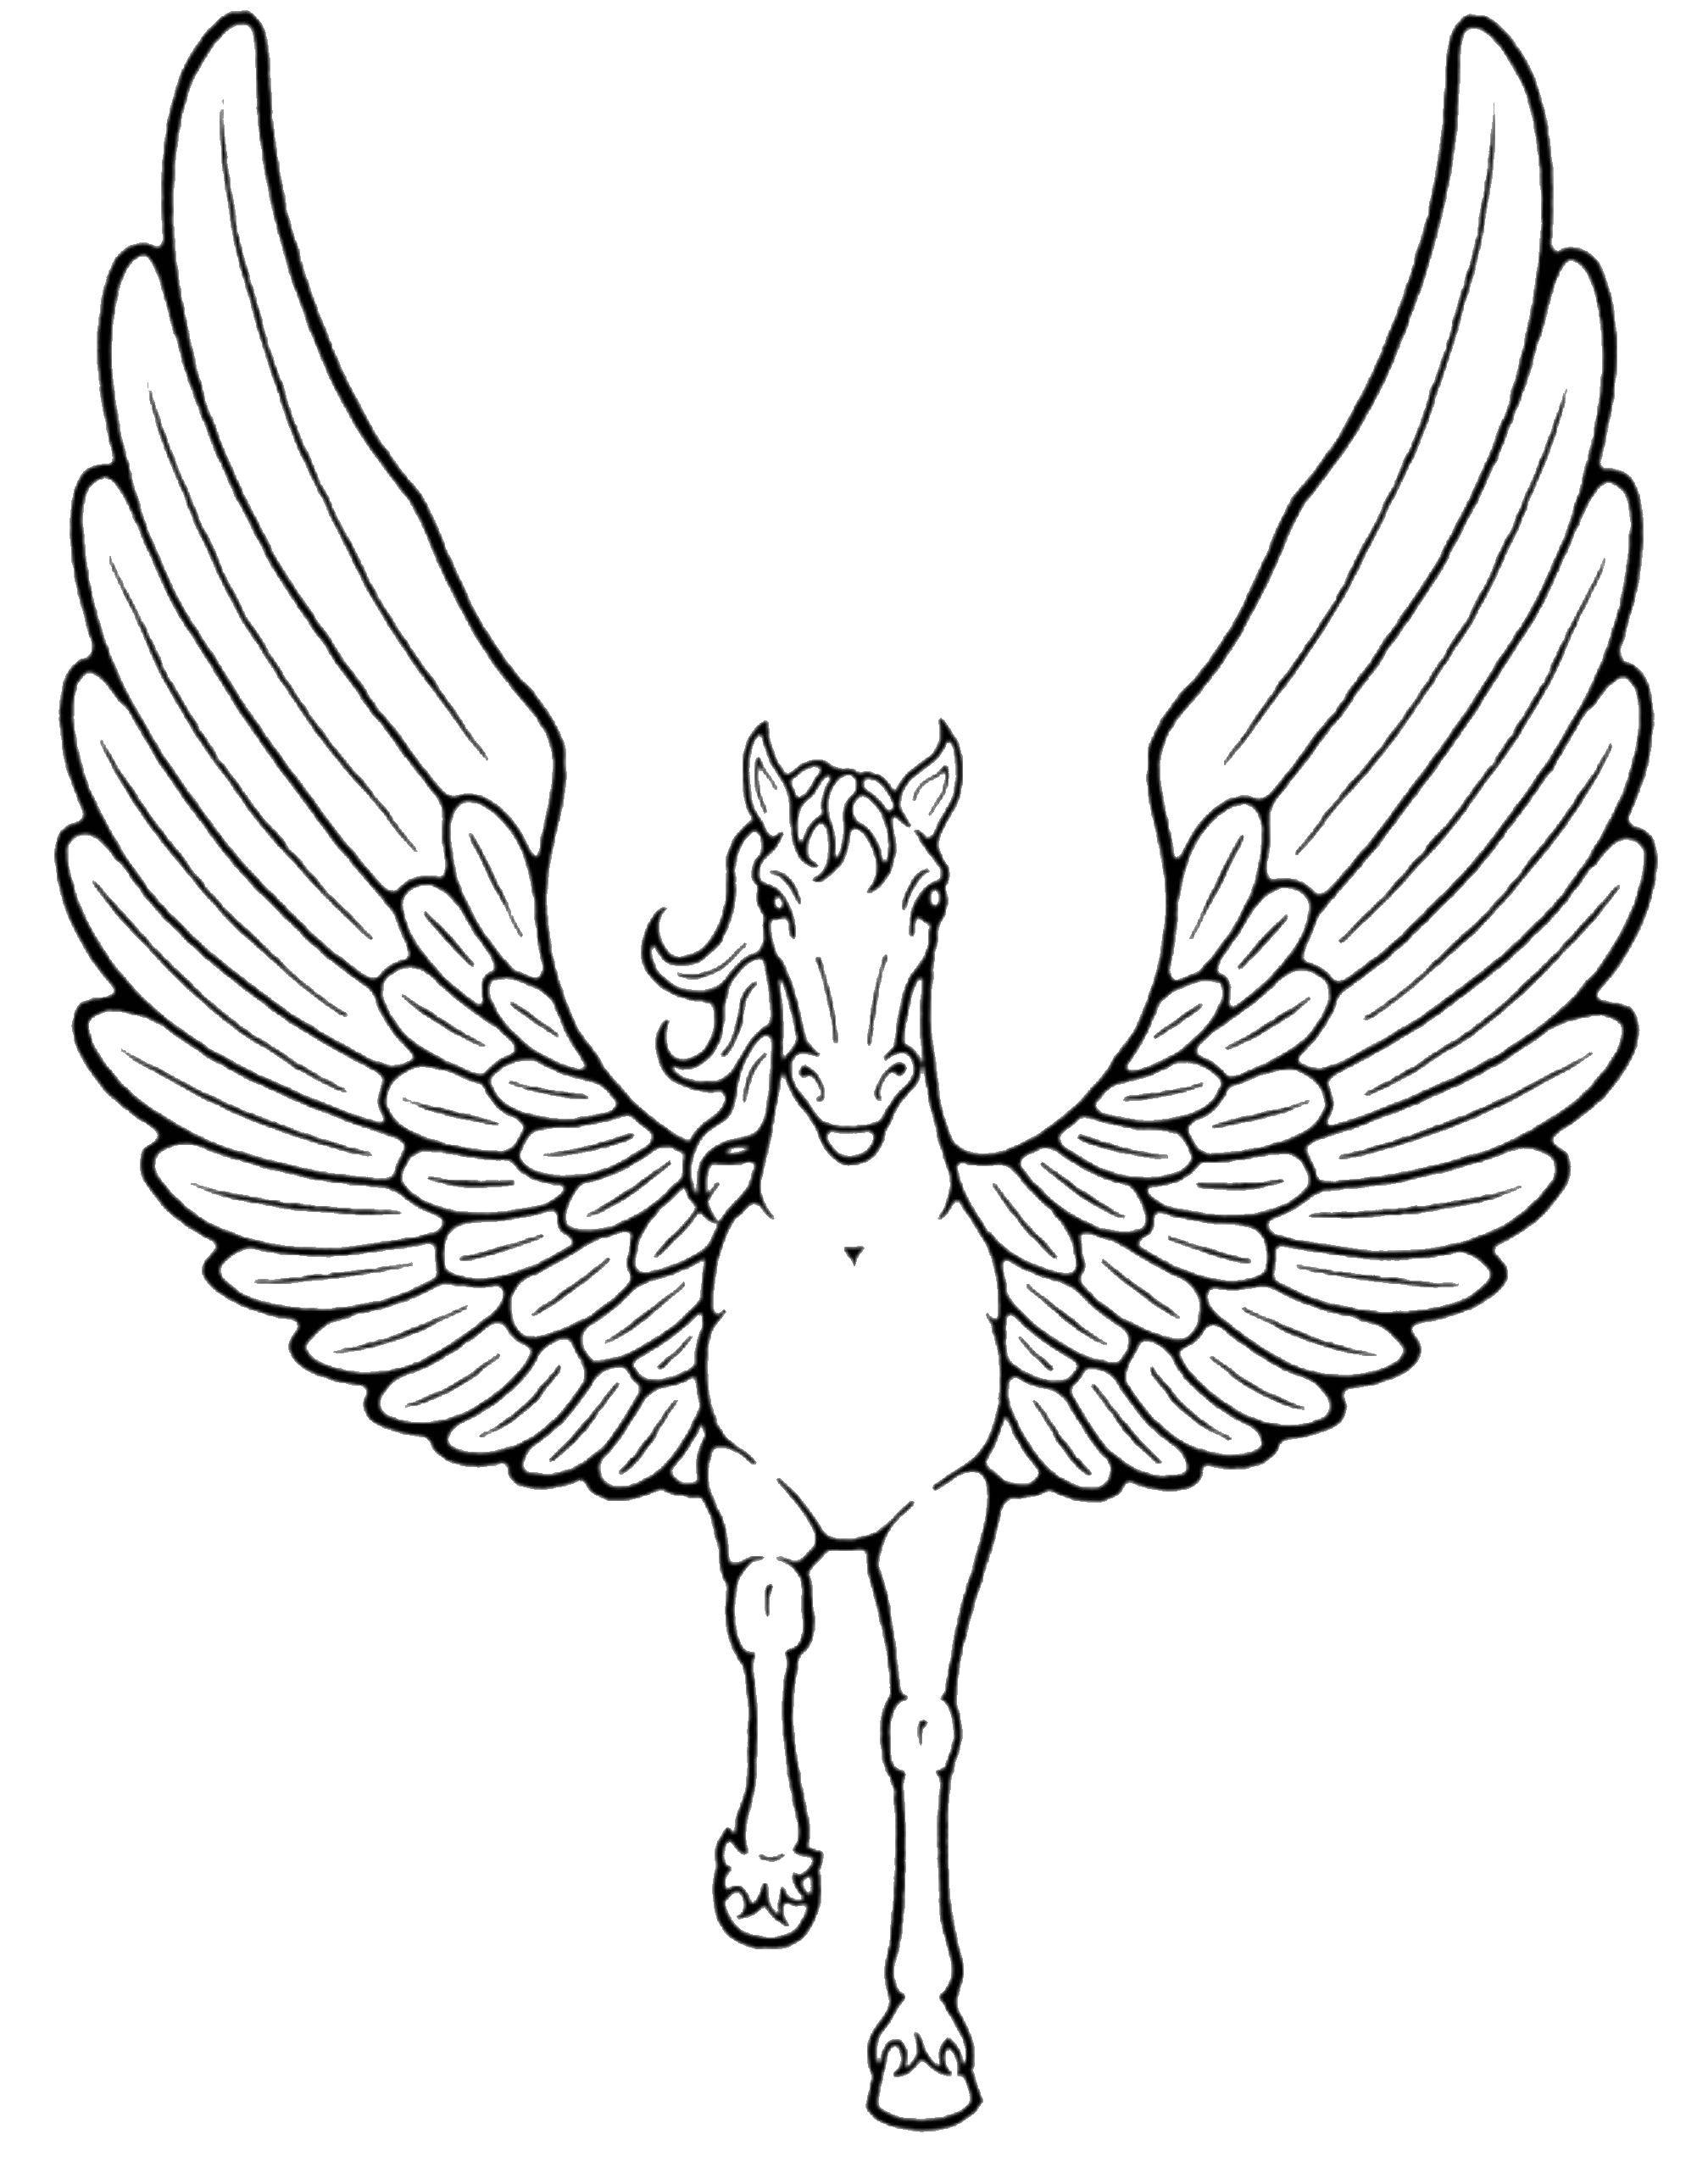 Coloring Pegasus. Category Animals. Tags:  Animals, Pegasus.